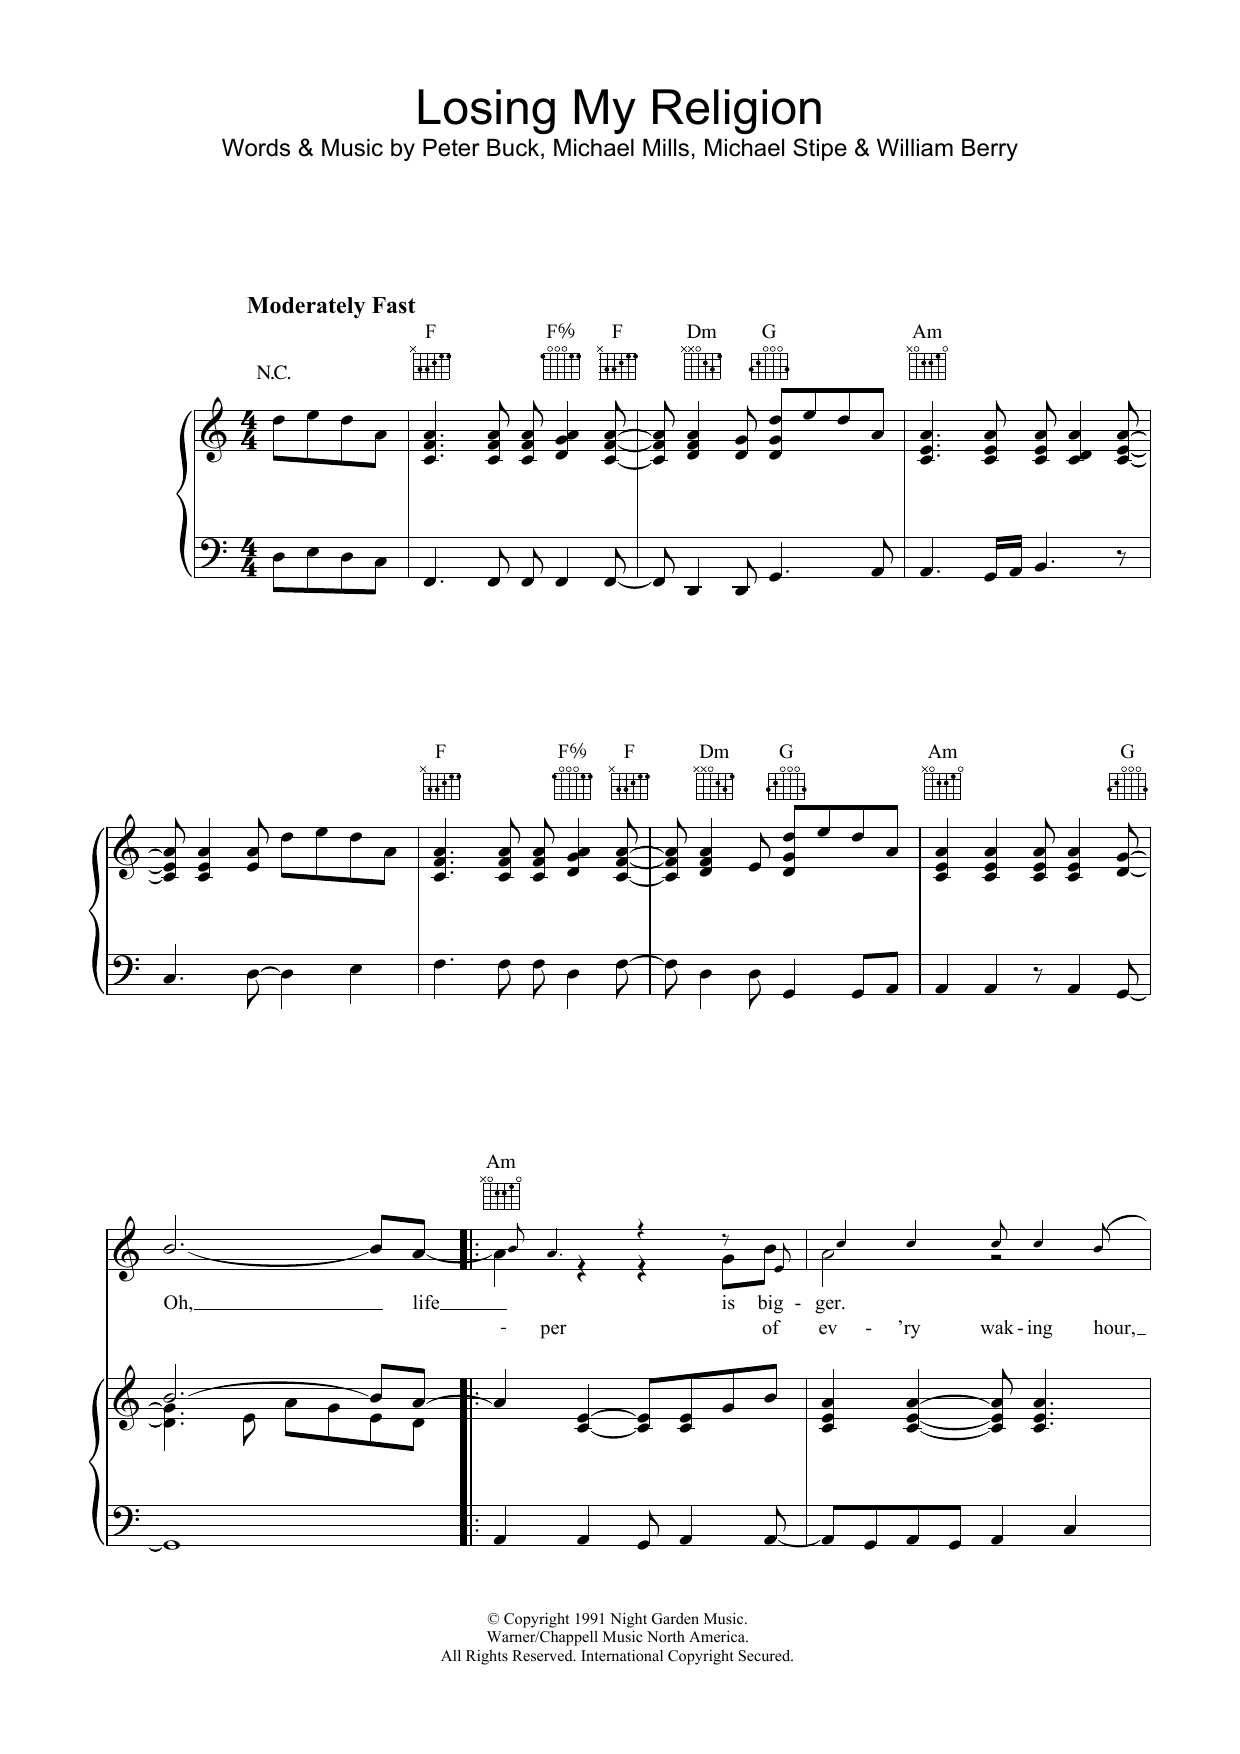 R.E.M. "Losing My Religion" Sheet Music PDF Notes, Chords | Rock Score Download SKU: 151902